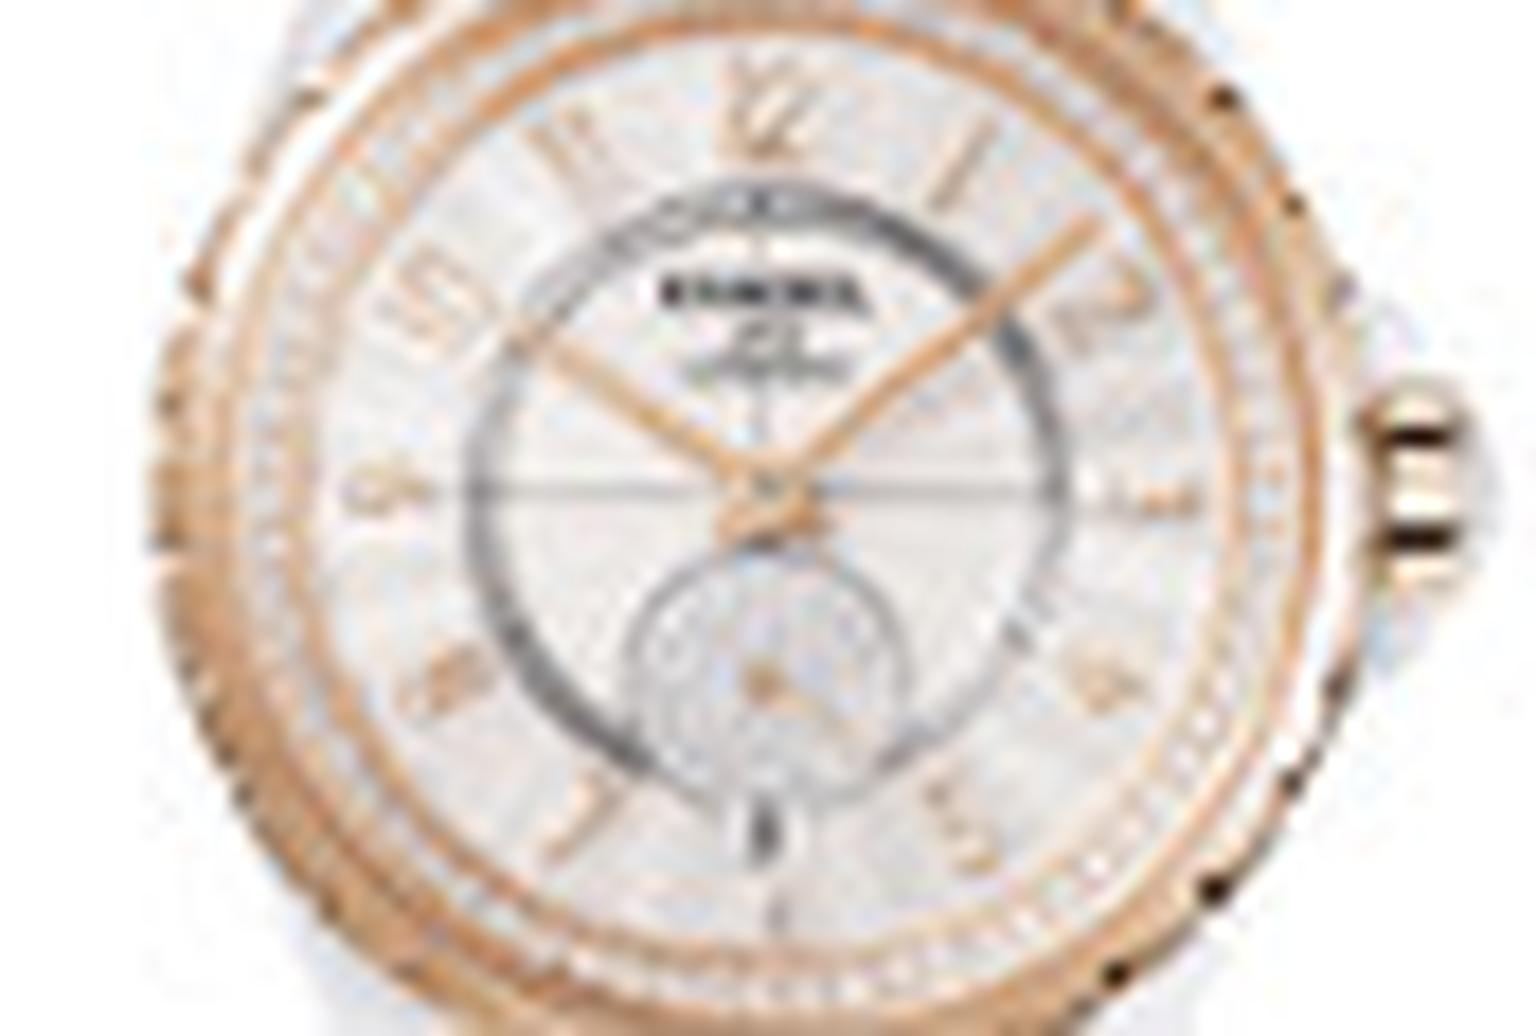 Chanel J12 365 watch